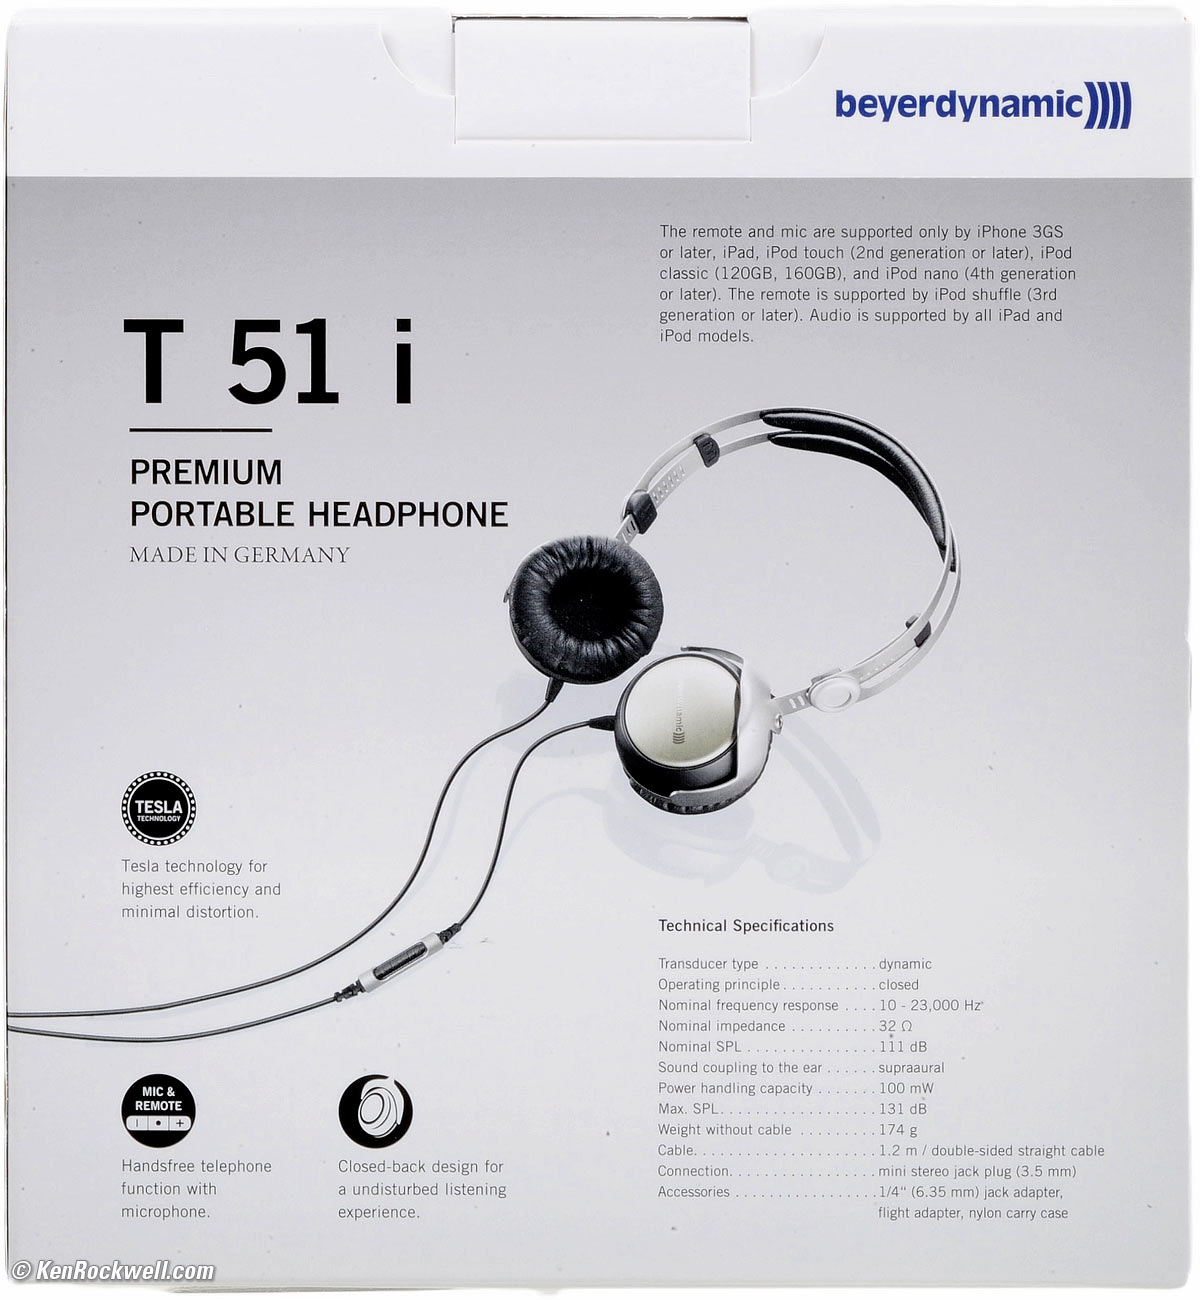 beyerdynamic Headphone Reviews by Ken Rockwell